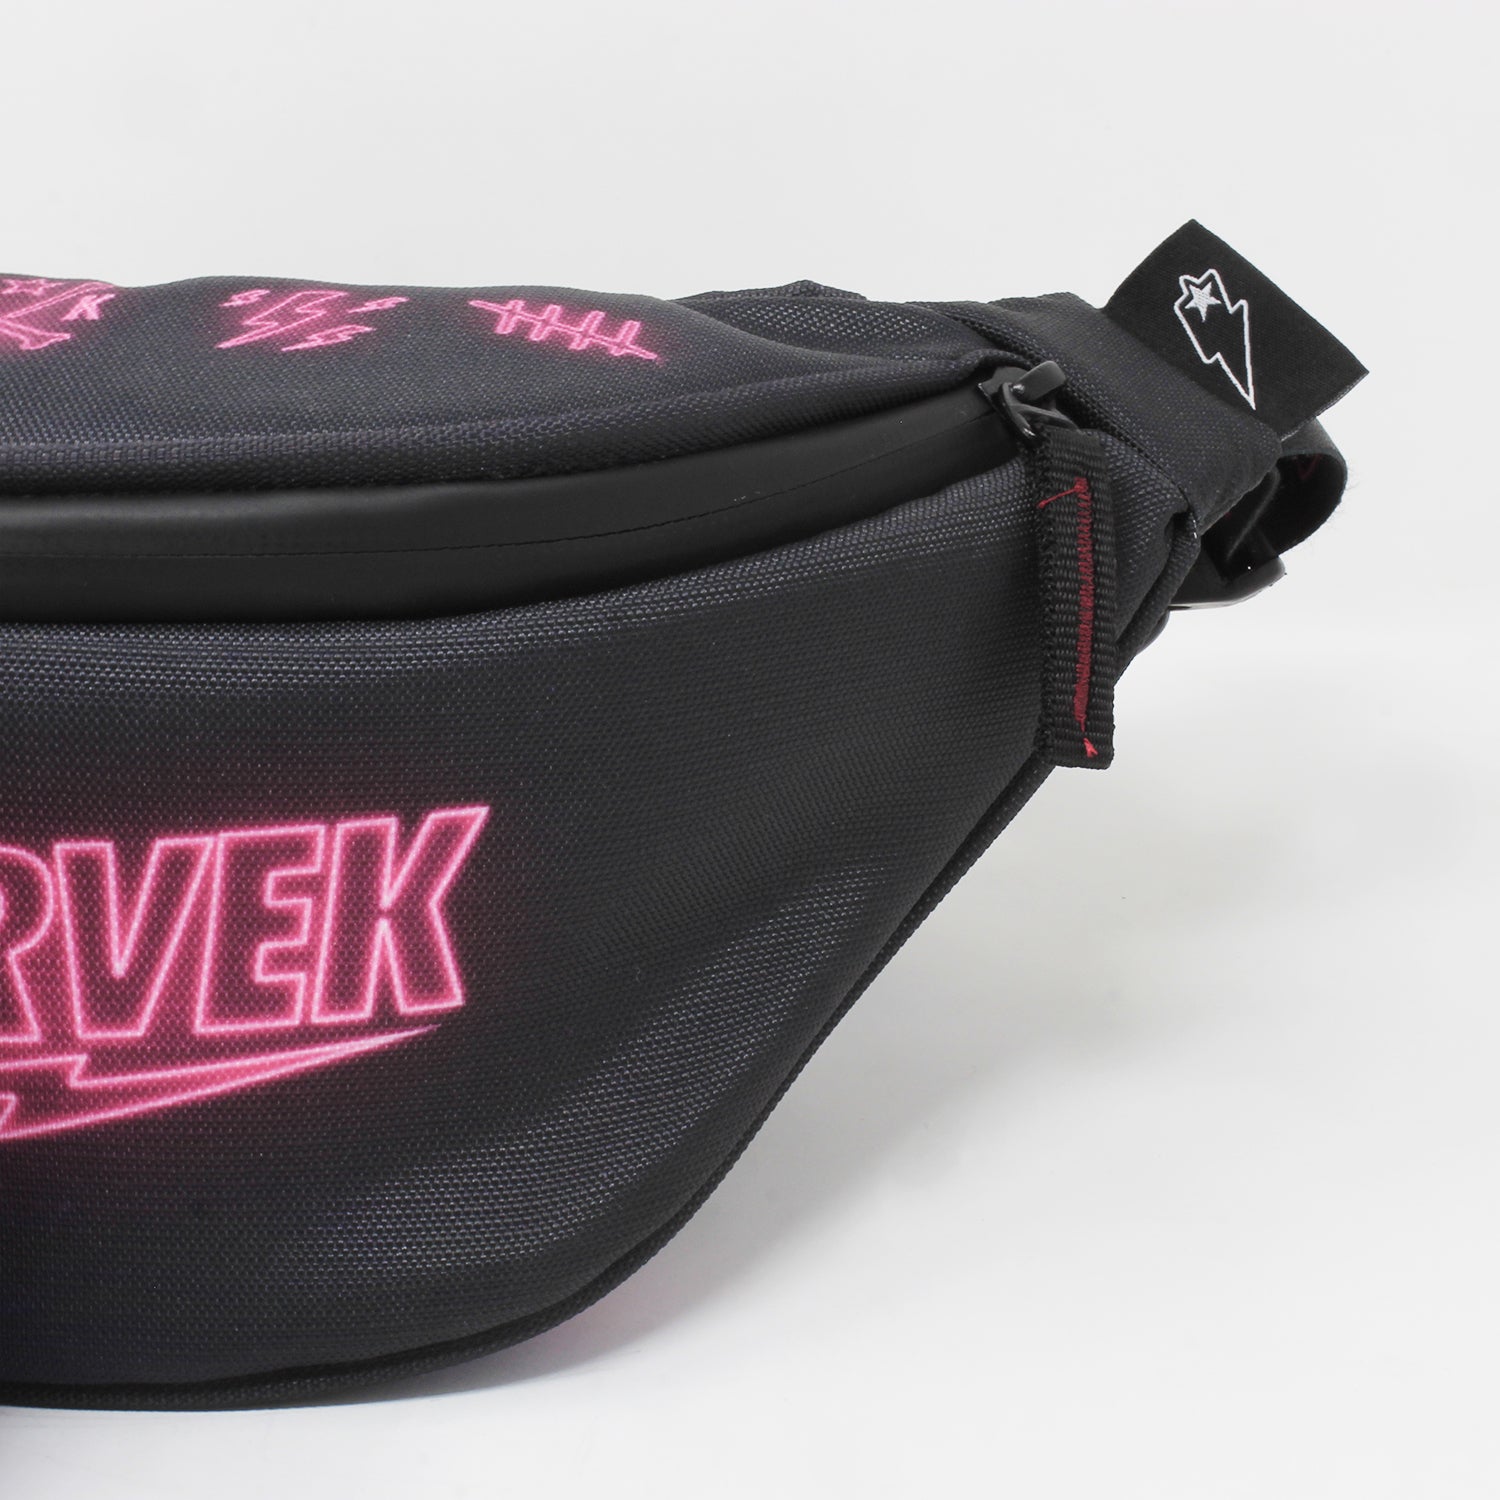 Supervek Crossbody Slinger - Veker - Urban Functional Fanny Hip Bag for Everyday Essentials - Side